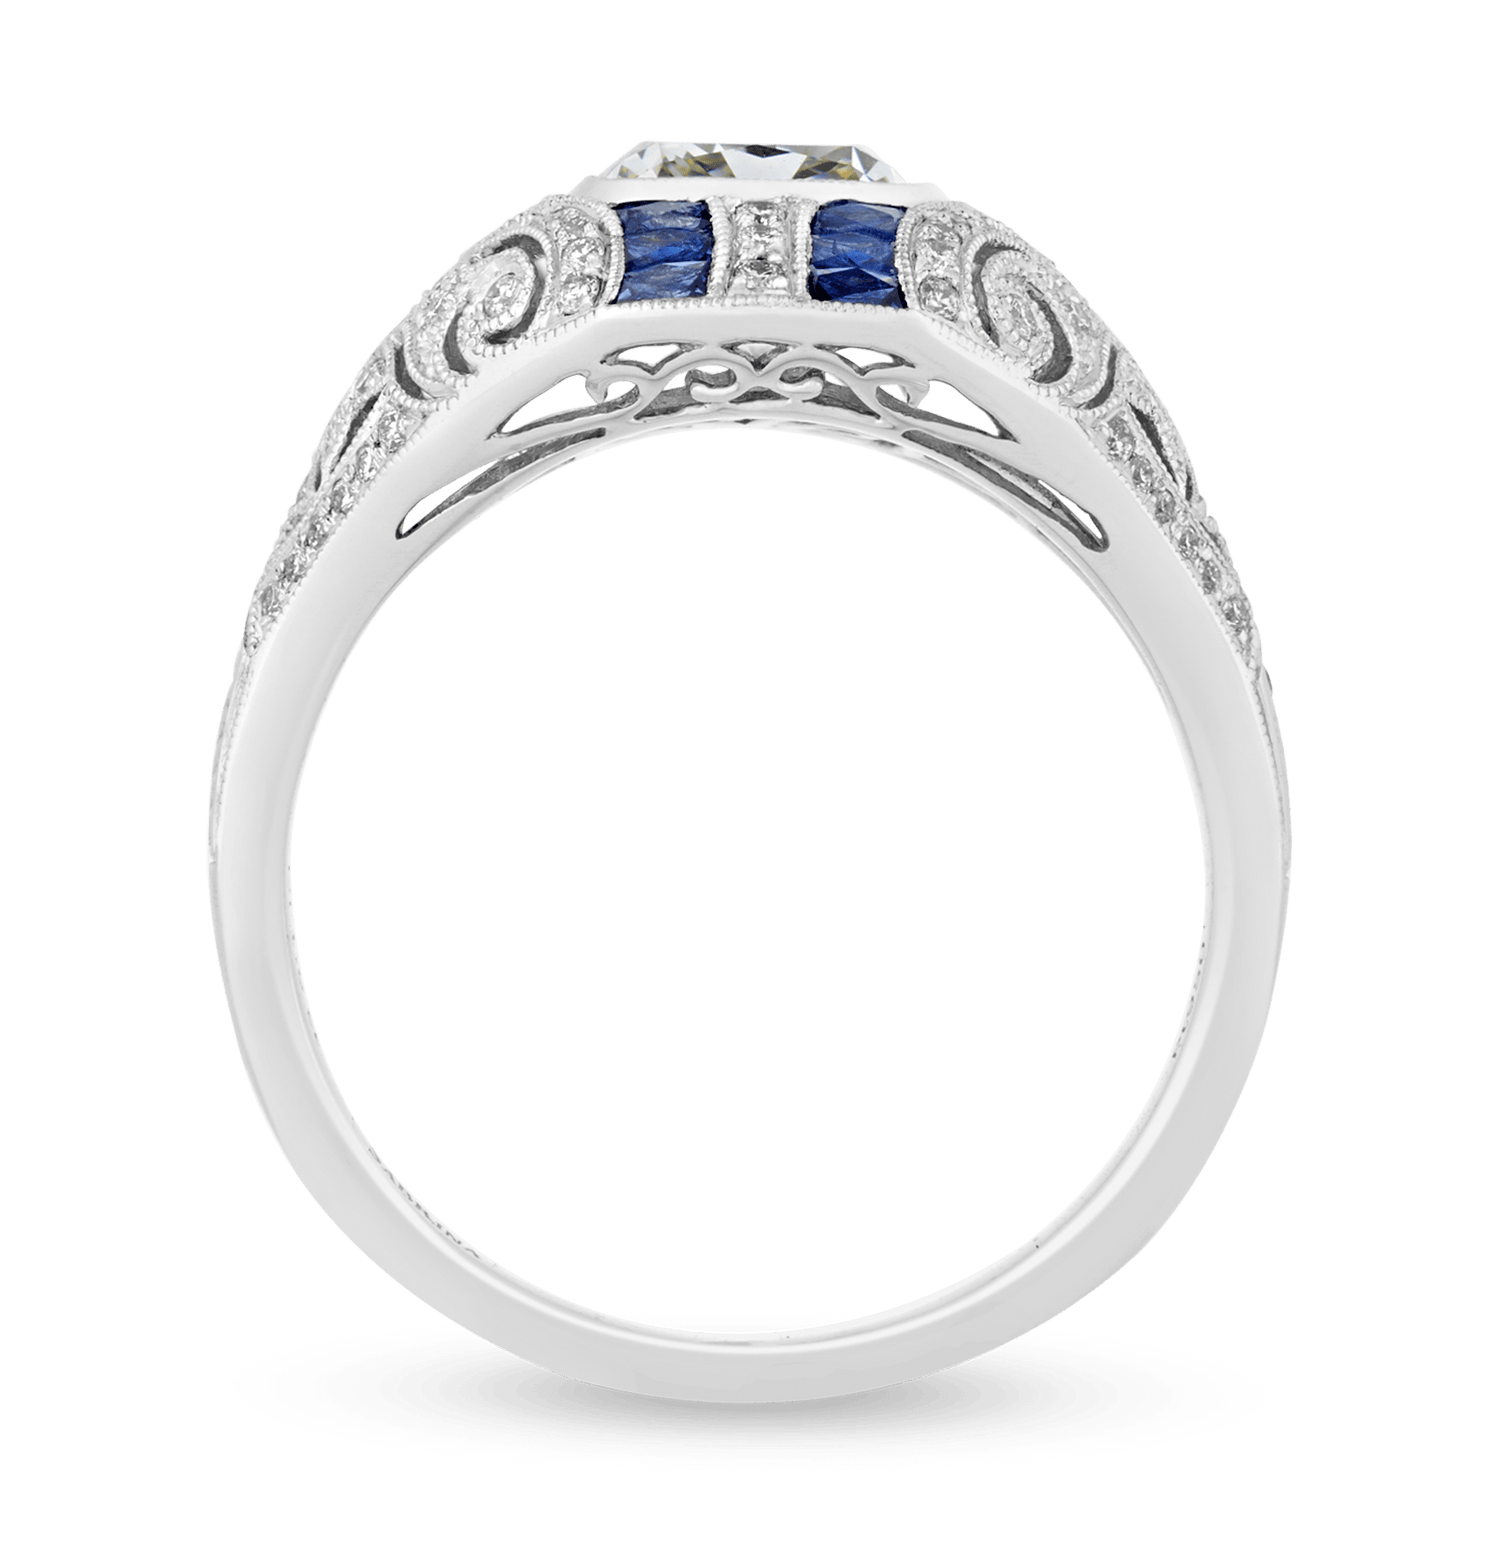 Cushion Cut Diamond Ring, 1.60 carats